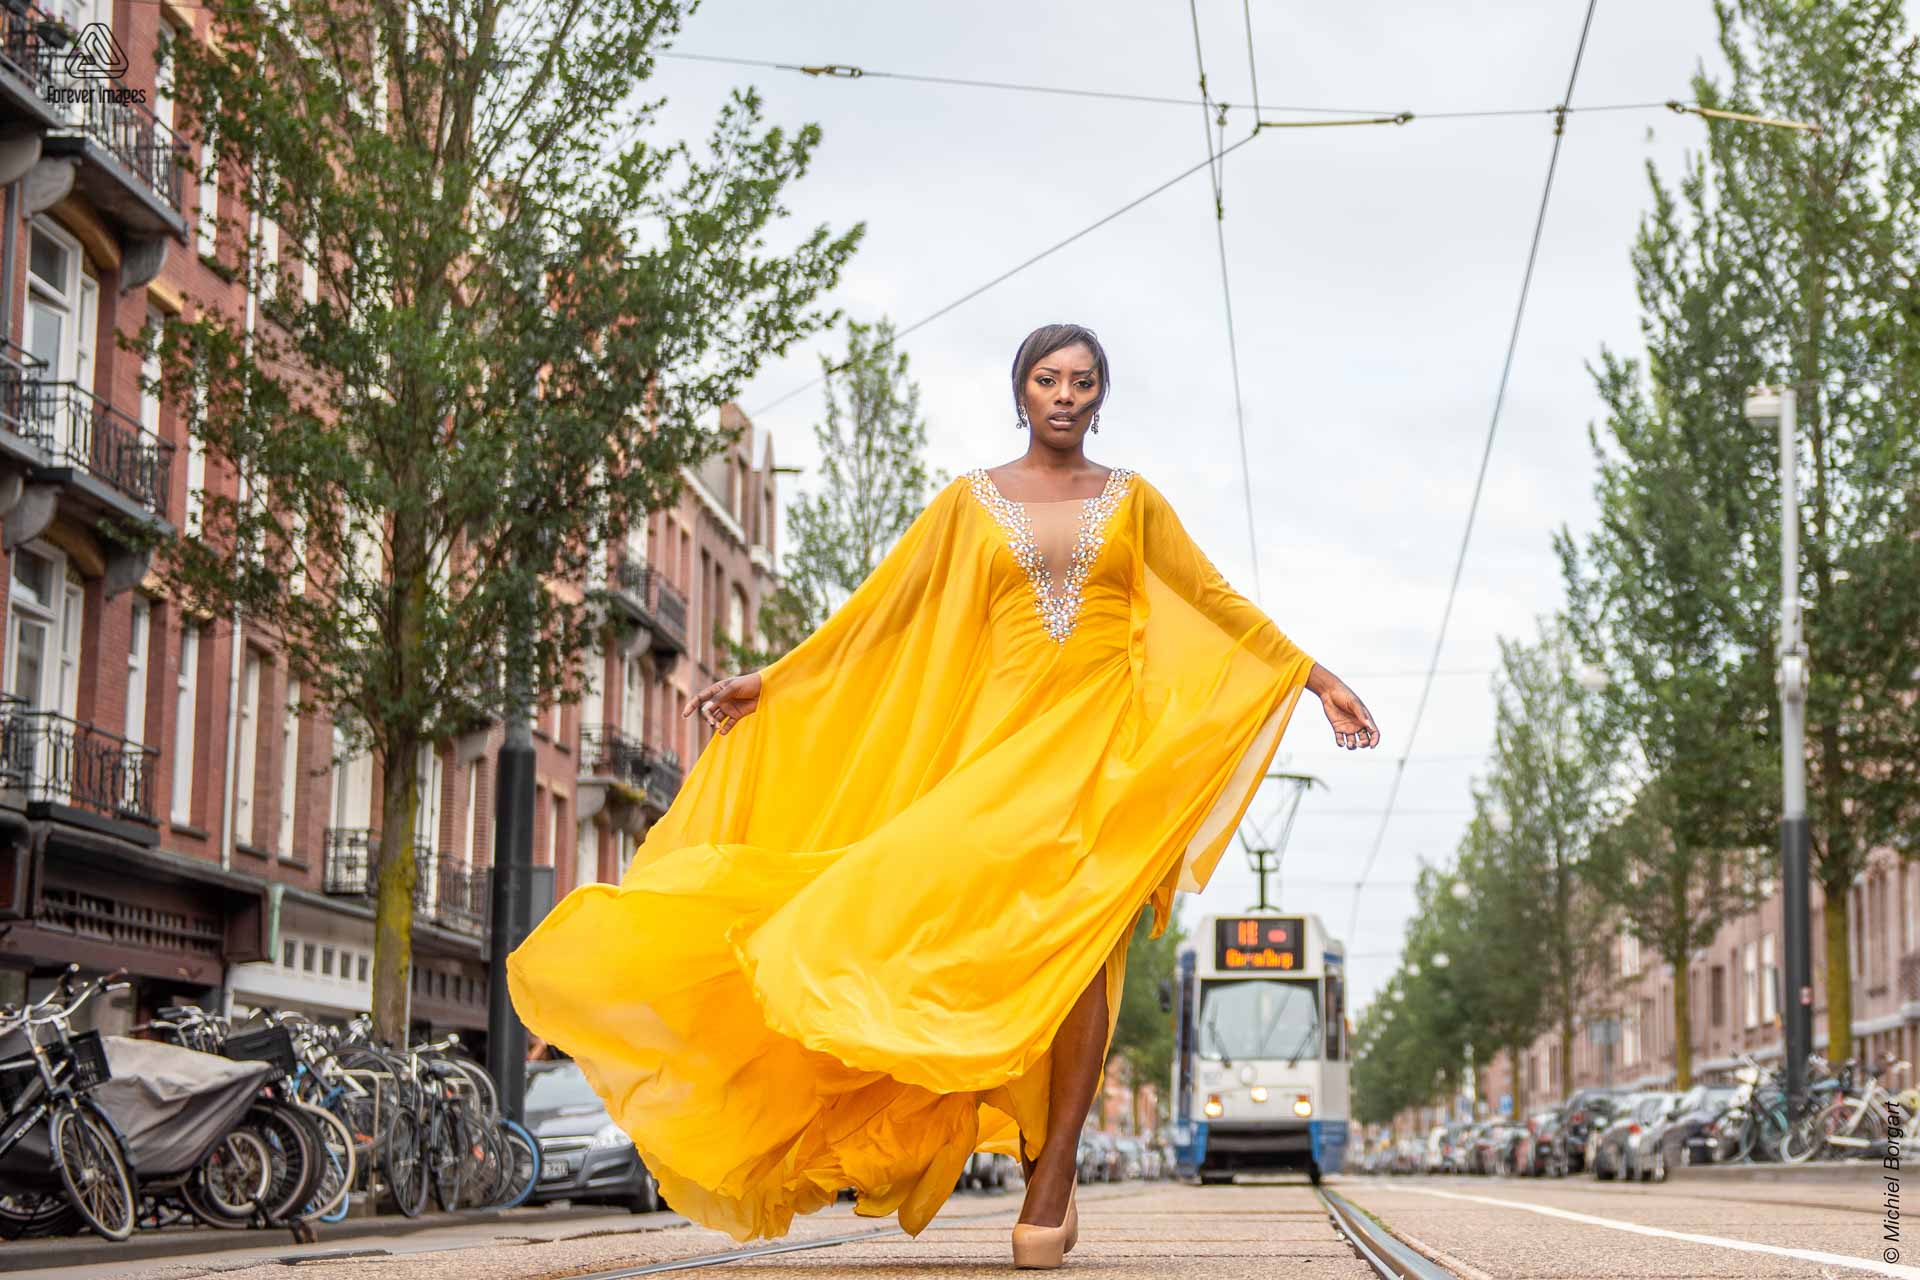 Fashion photo urben shoot yellow dress tram Amsterdam | Mariana Pietersz David Cardenas Miss Avantgarde | Fashion Photographer Michiel Borgart - Forever Images.